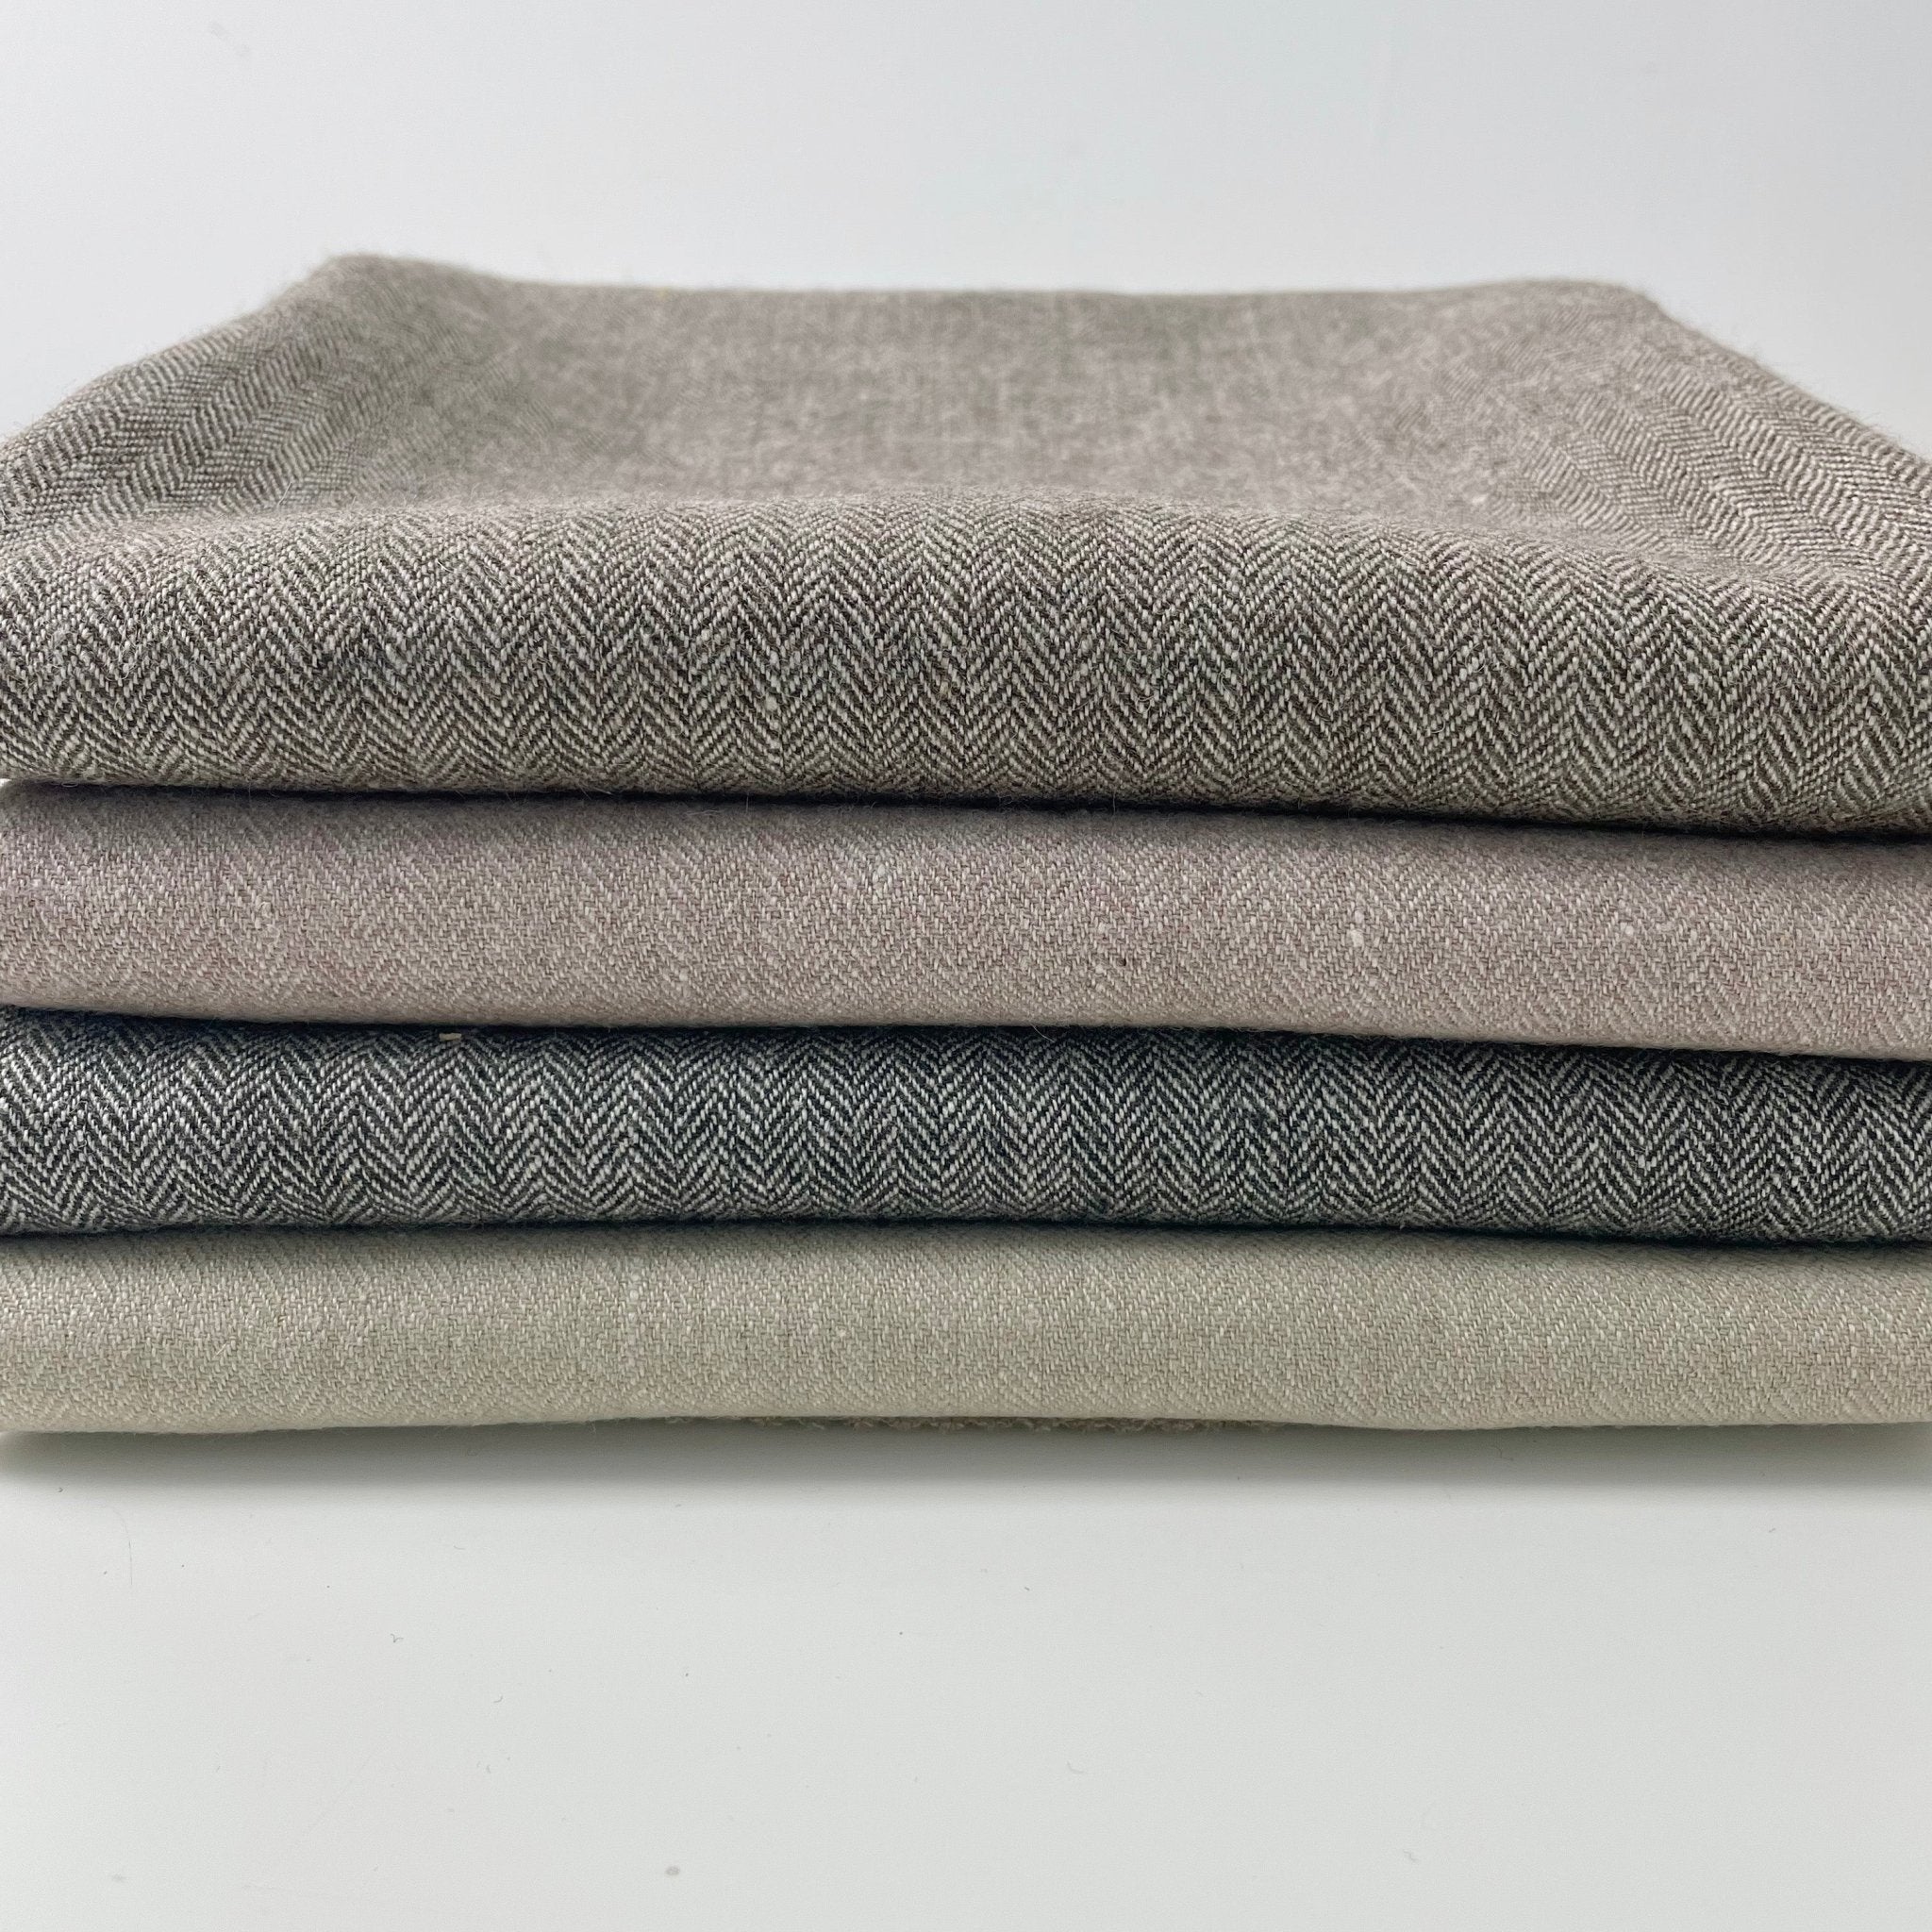 Linen Nylon Wool HBT Fabric 7009 7004 7013 7010 - The Linen Lab - 7013 D/PINK